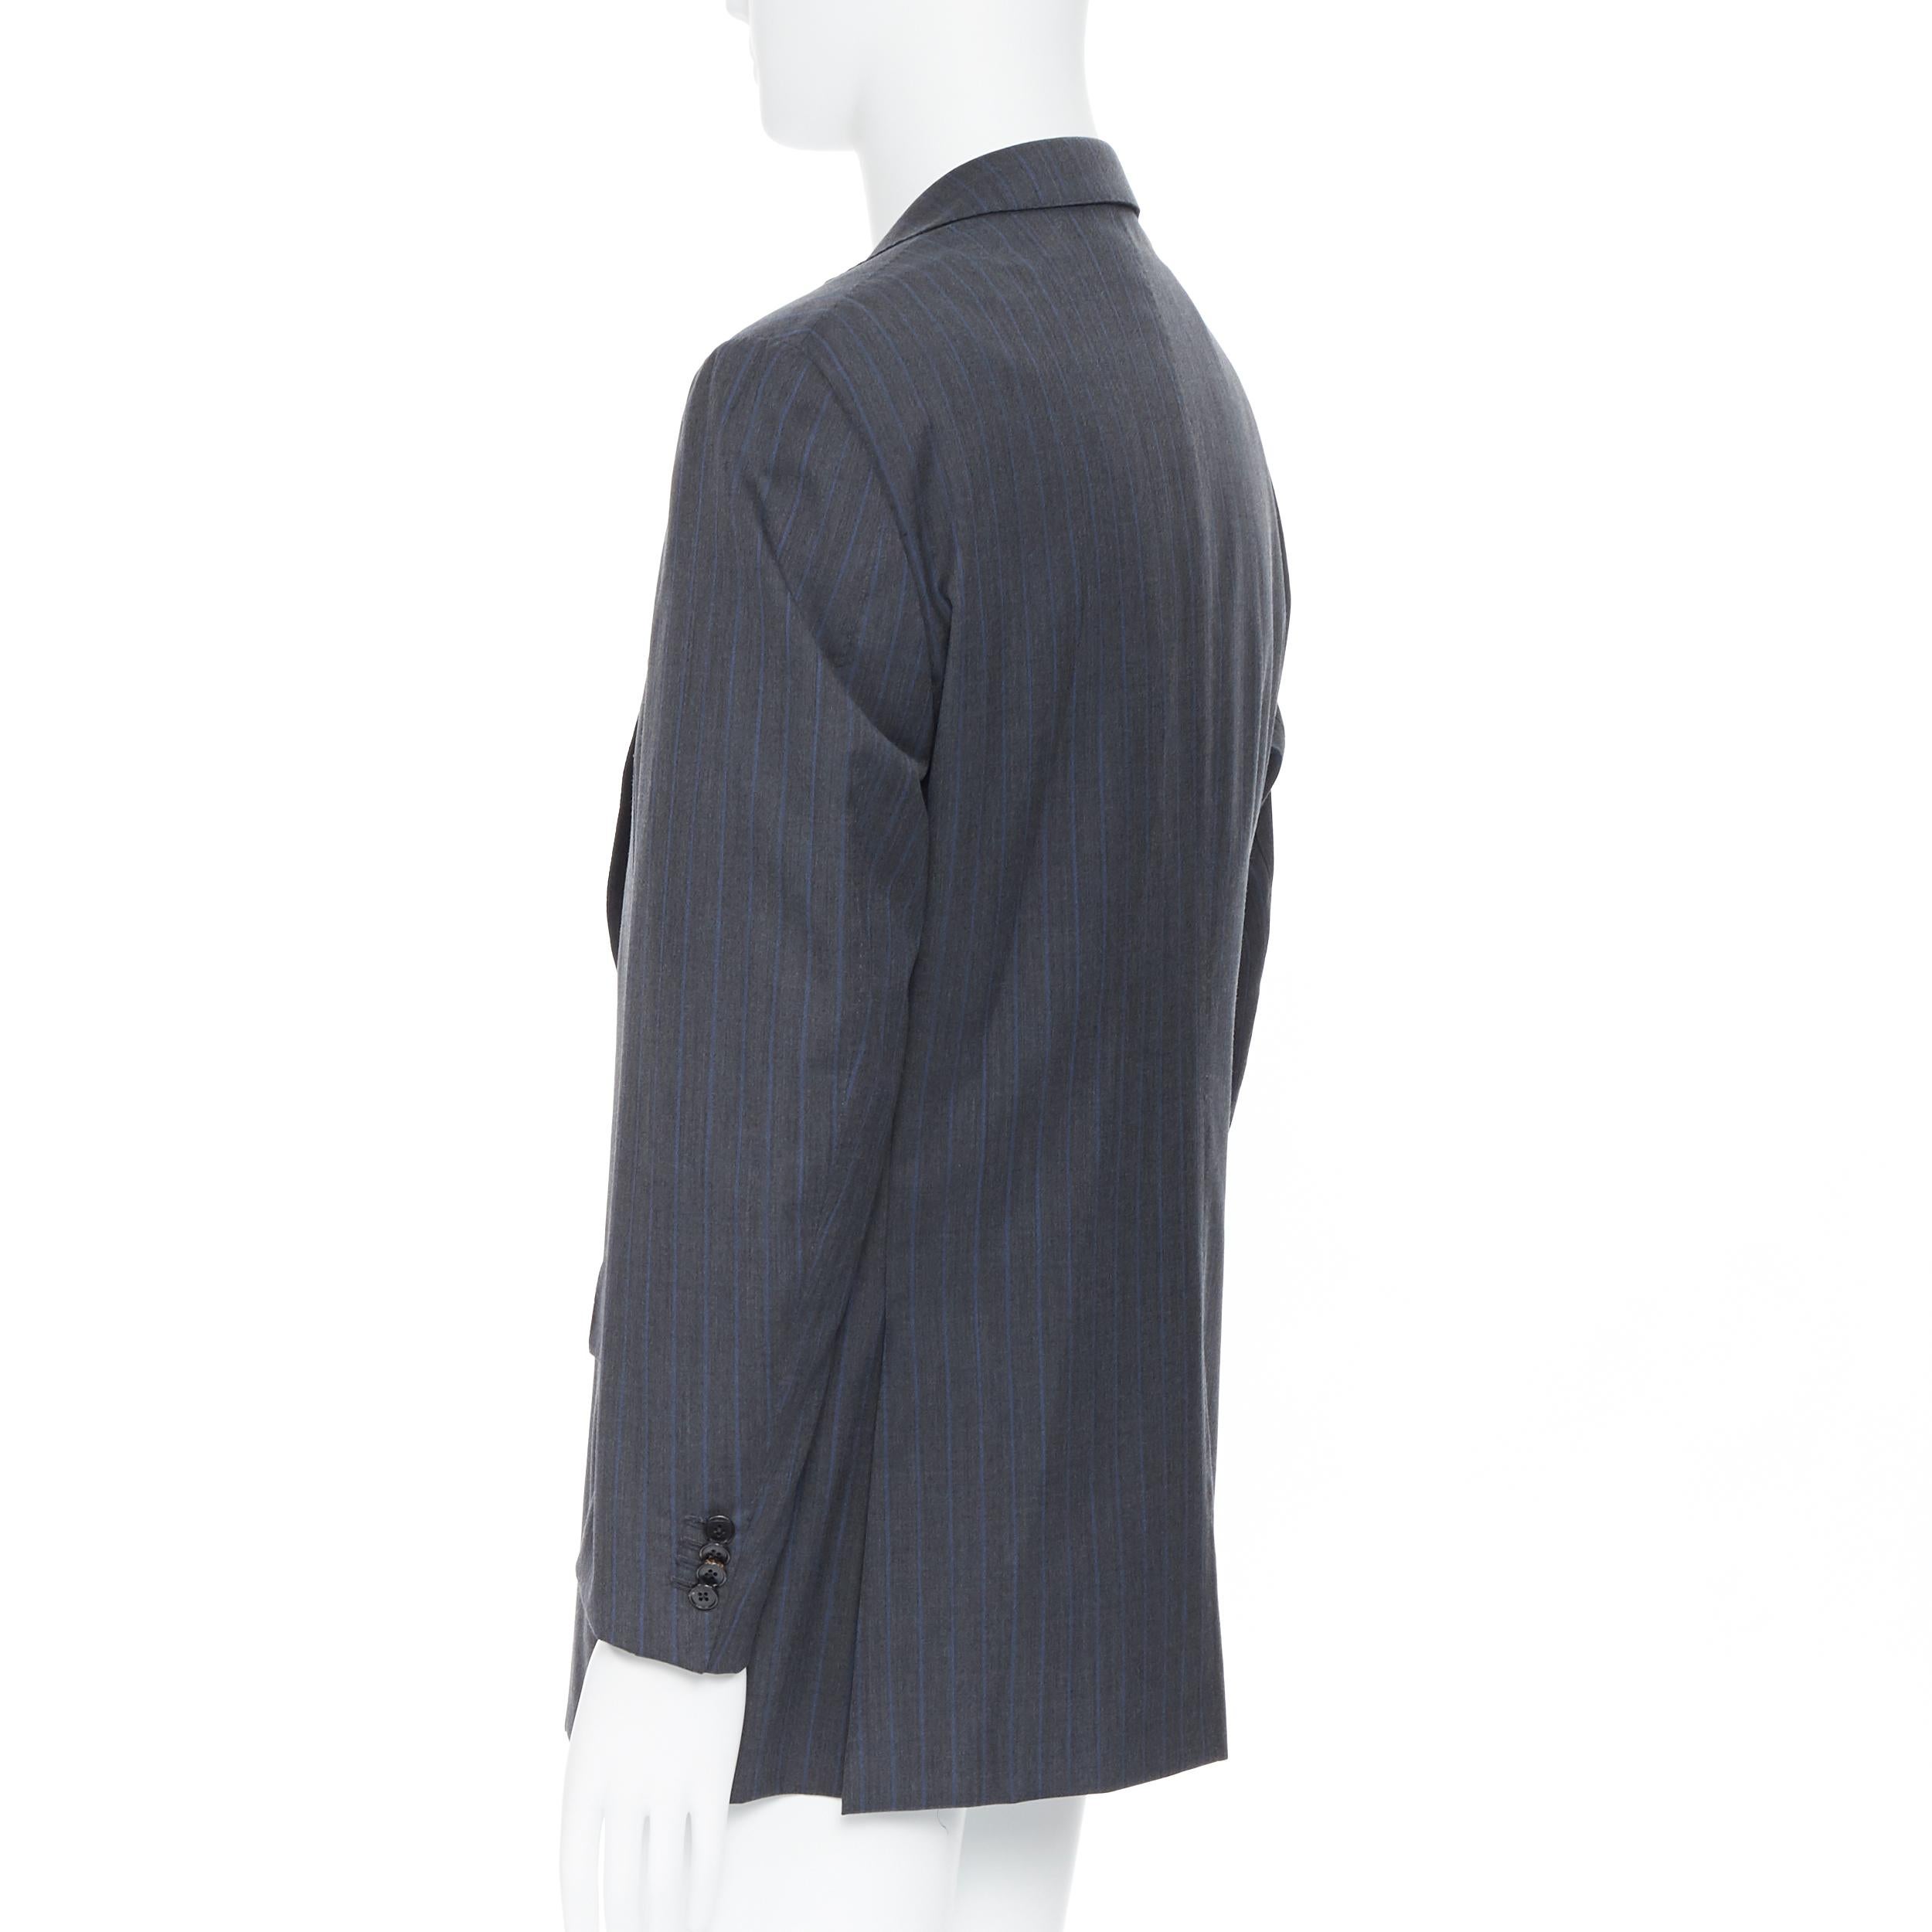 ERMENEGILDO ZEGNA Cool Effect grey blue pinstripe wool classic blazer jacket 50R 2